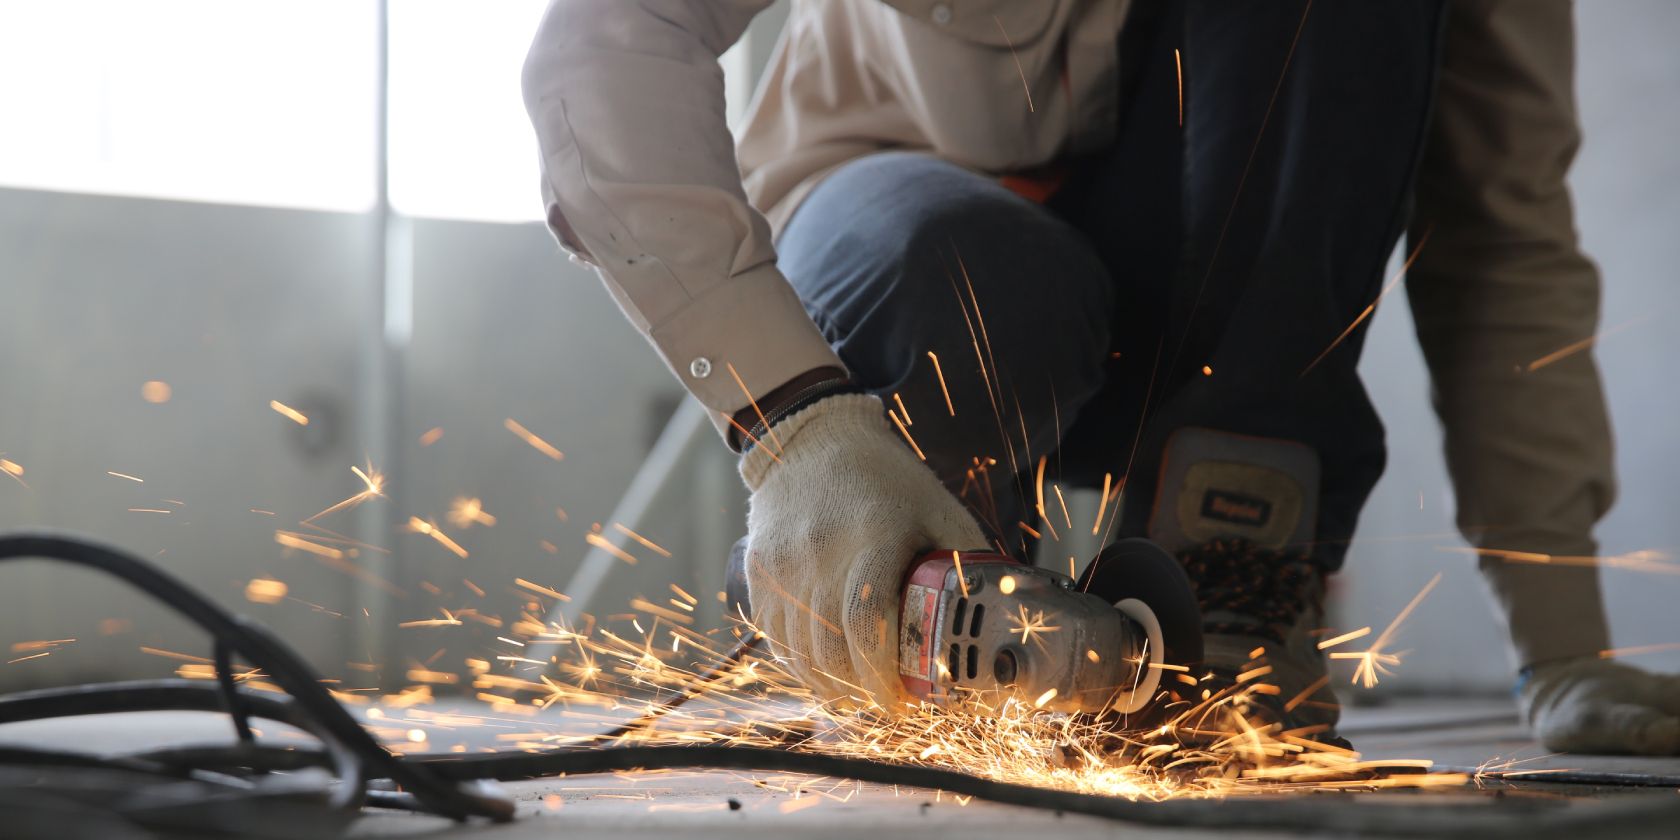 man working on metal with grinder